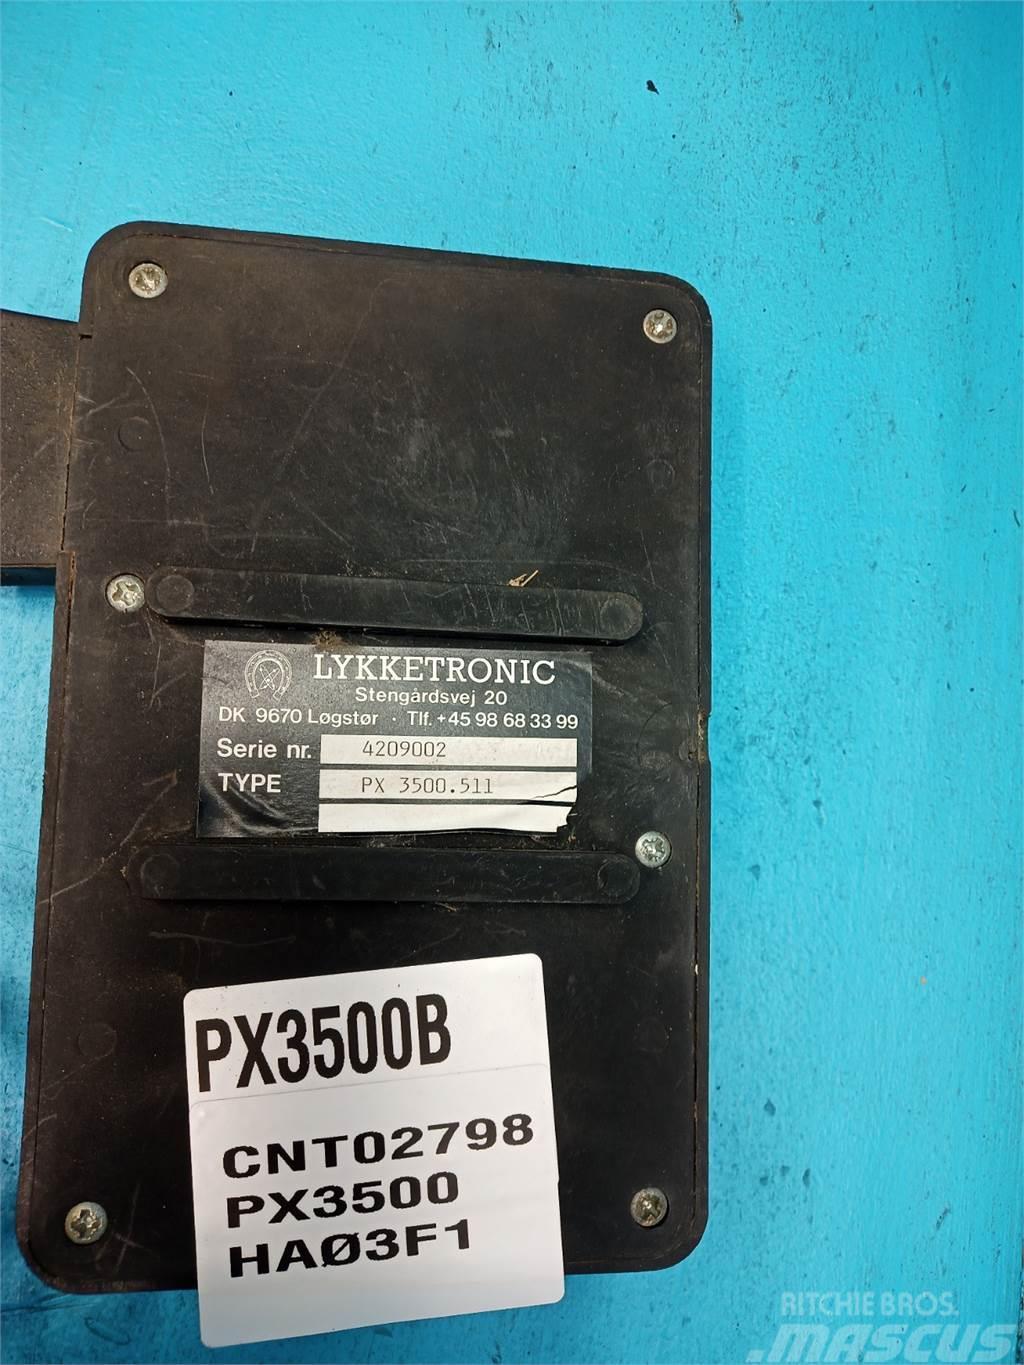  Lykketronic PX3500 Electronique